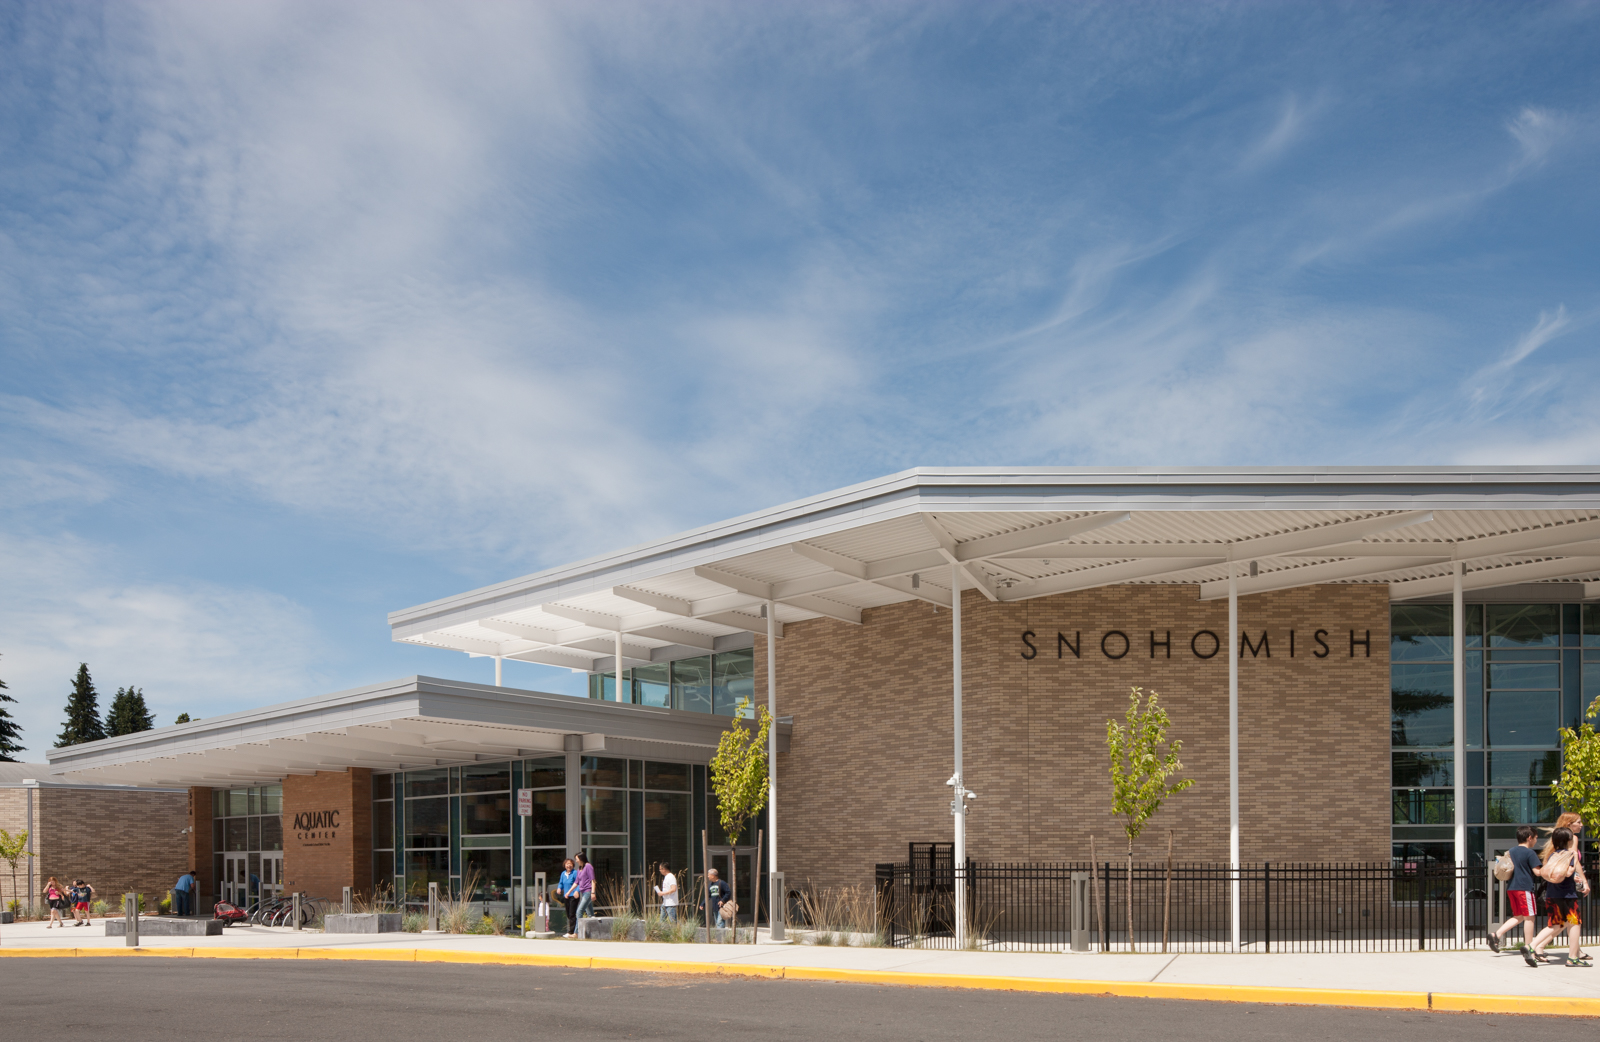 Snohomish Aquatic Center